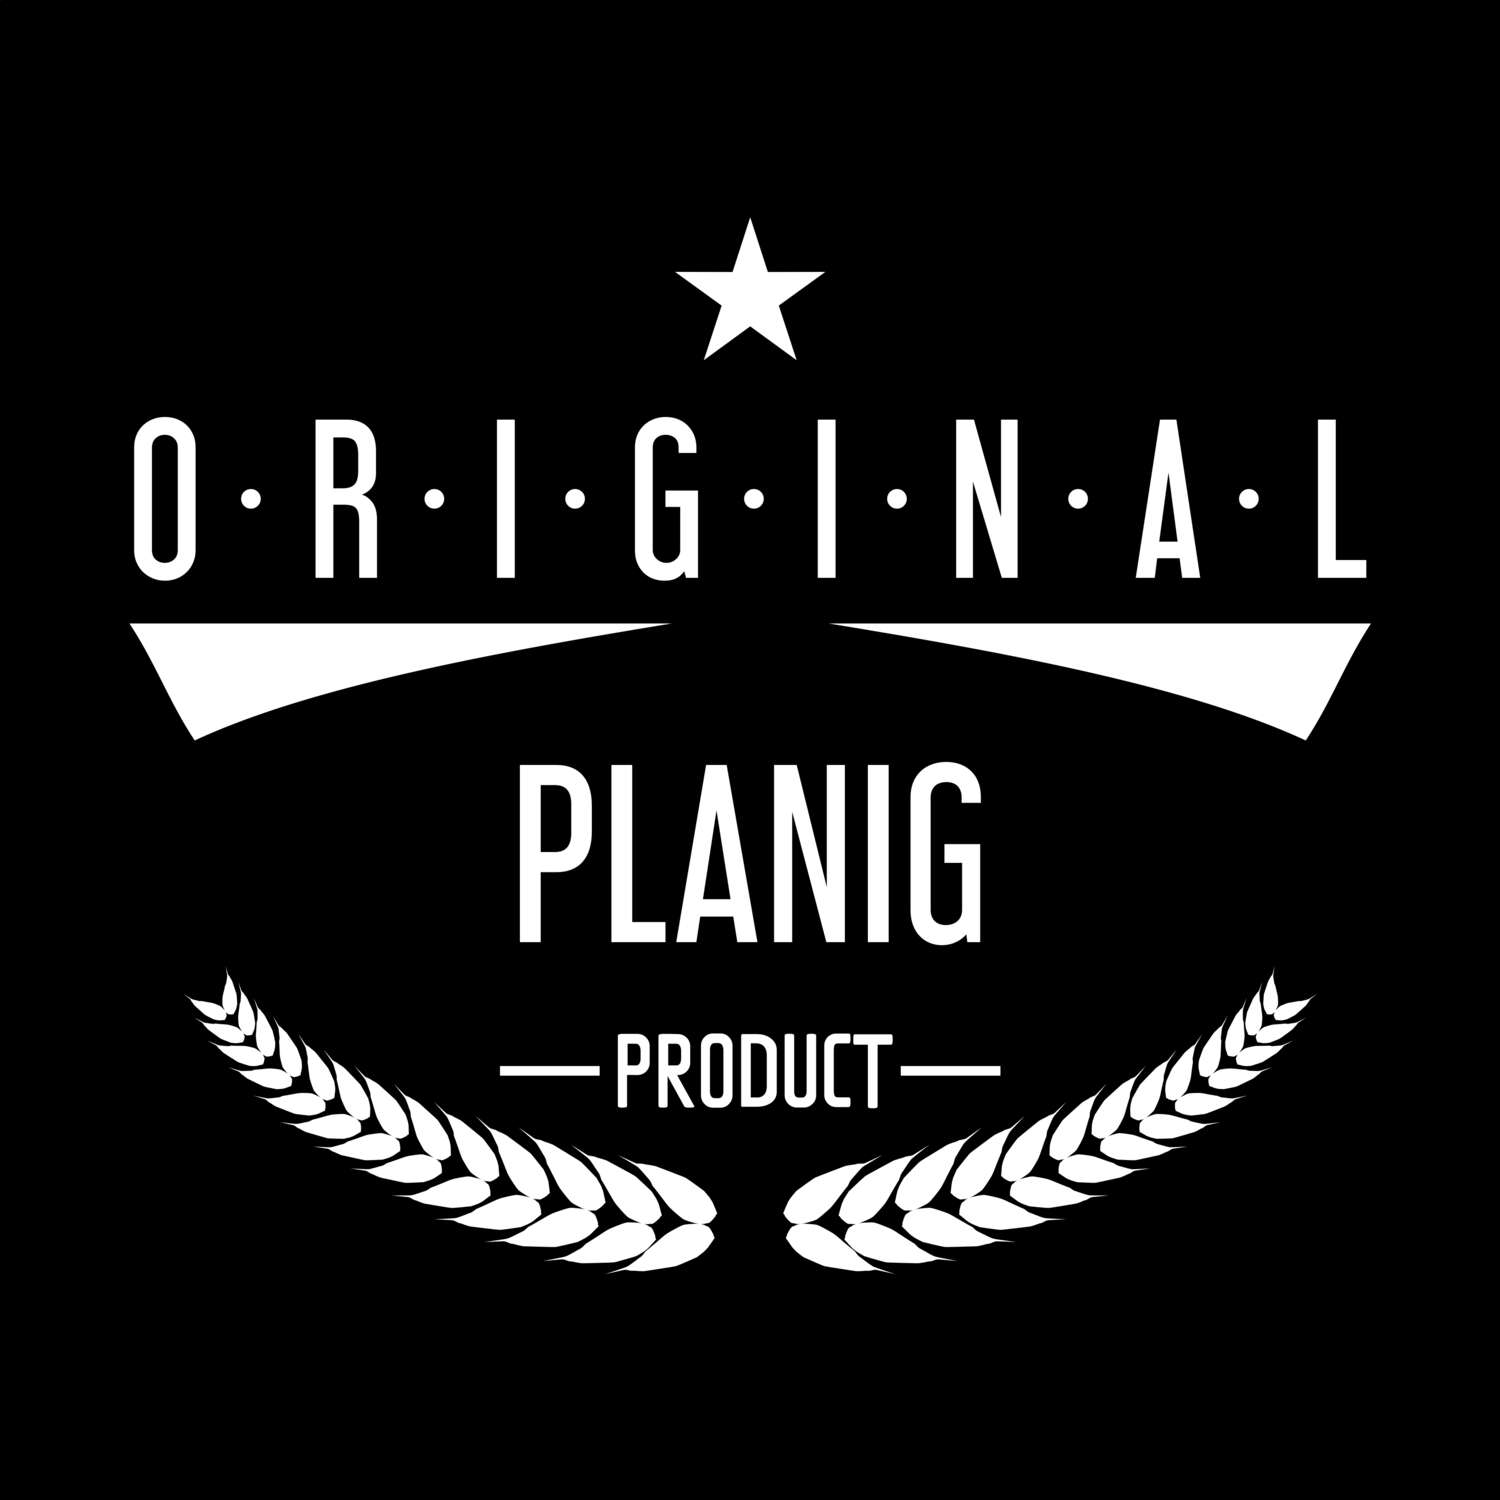 Planig T-Shirt »Original Product«